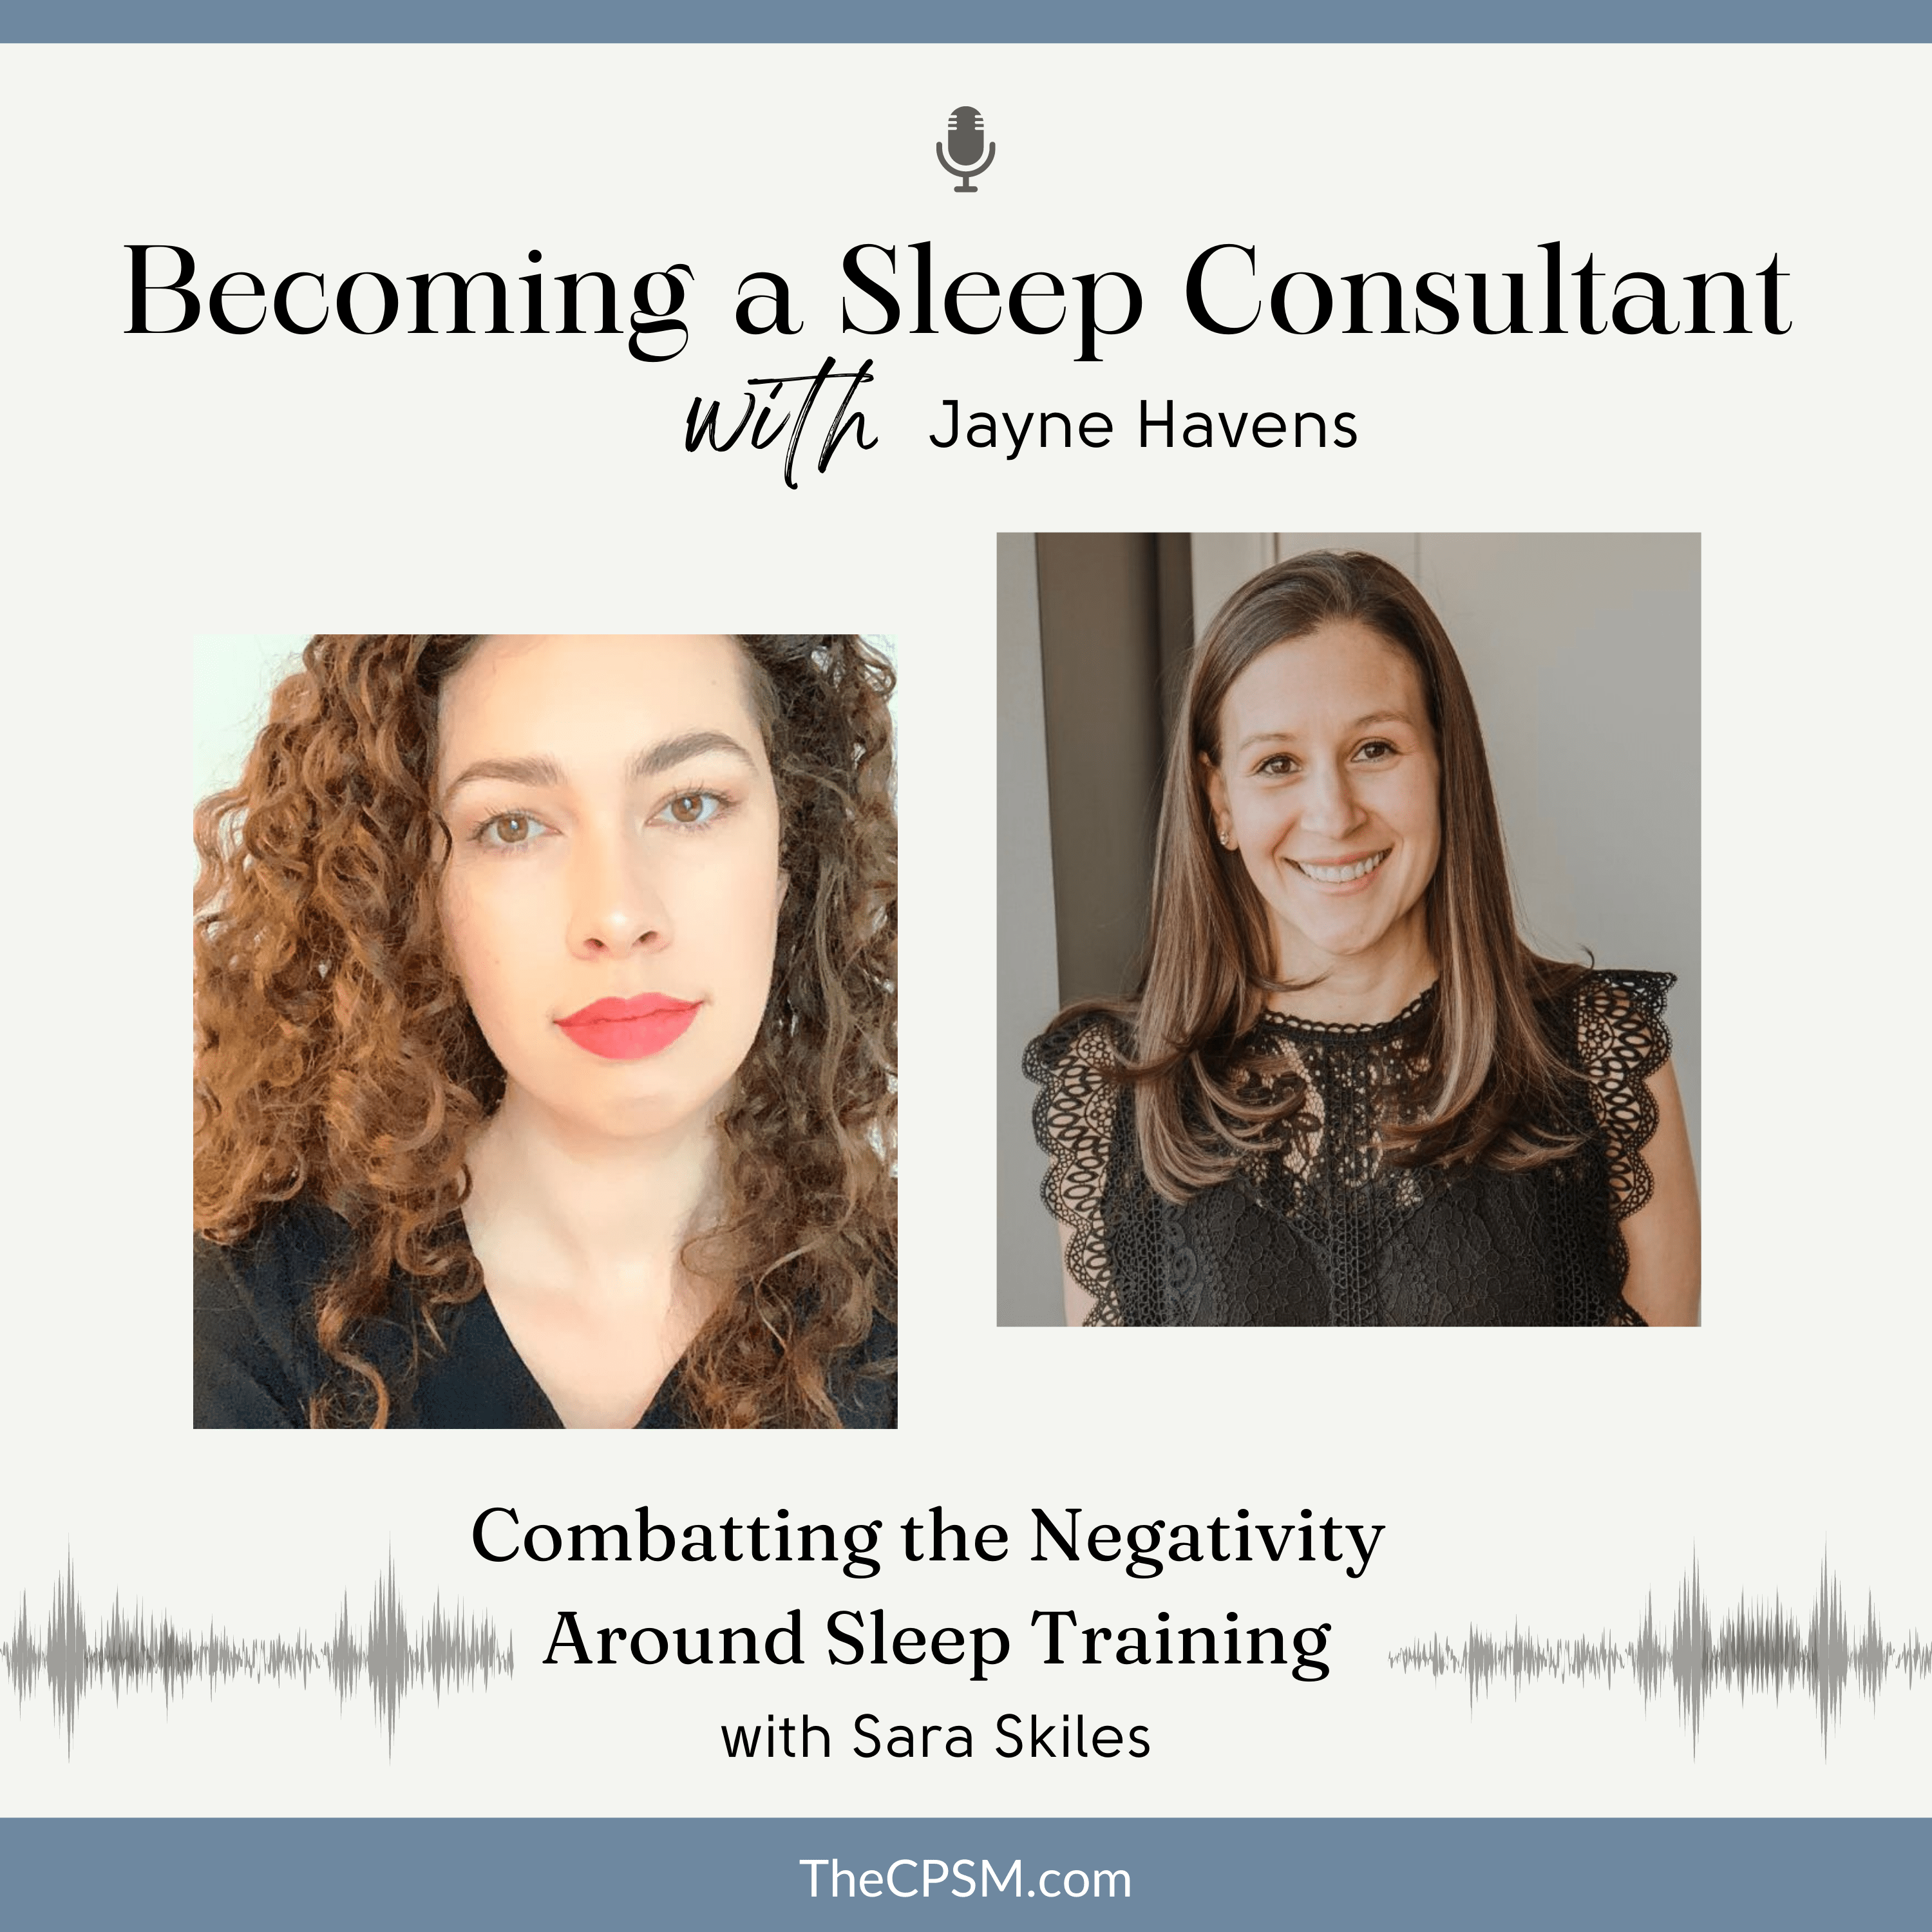 Combatting the Negativity Around Sleep Training with Sara Skilesm